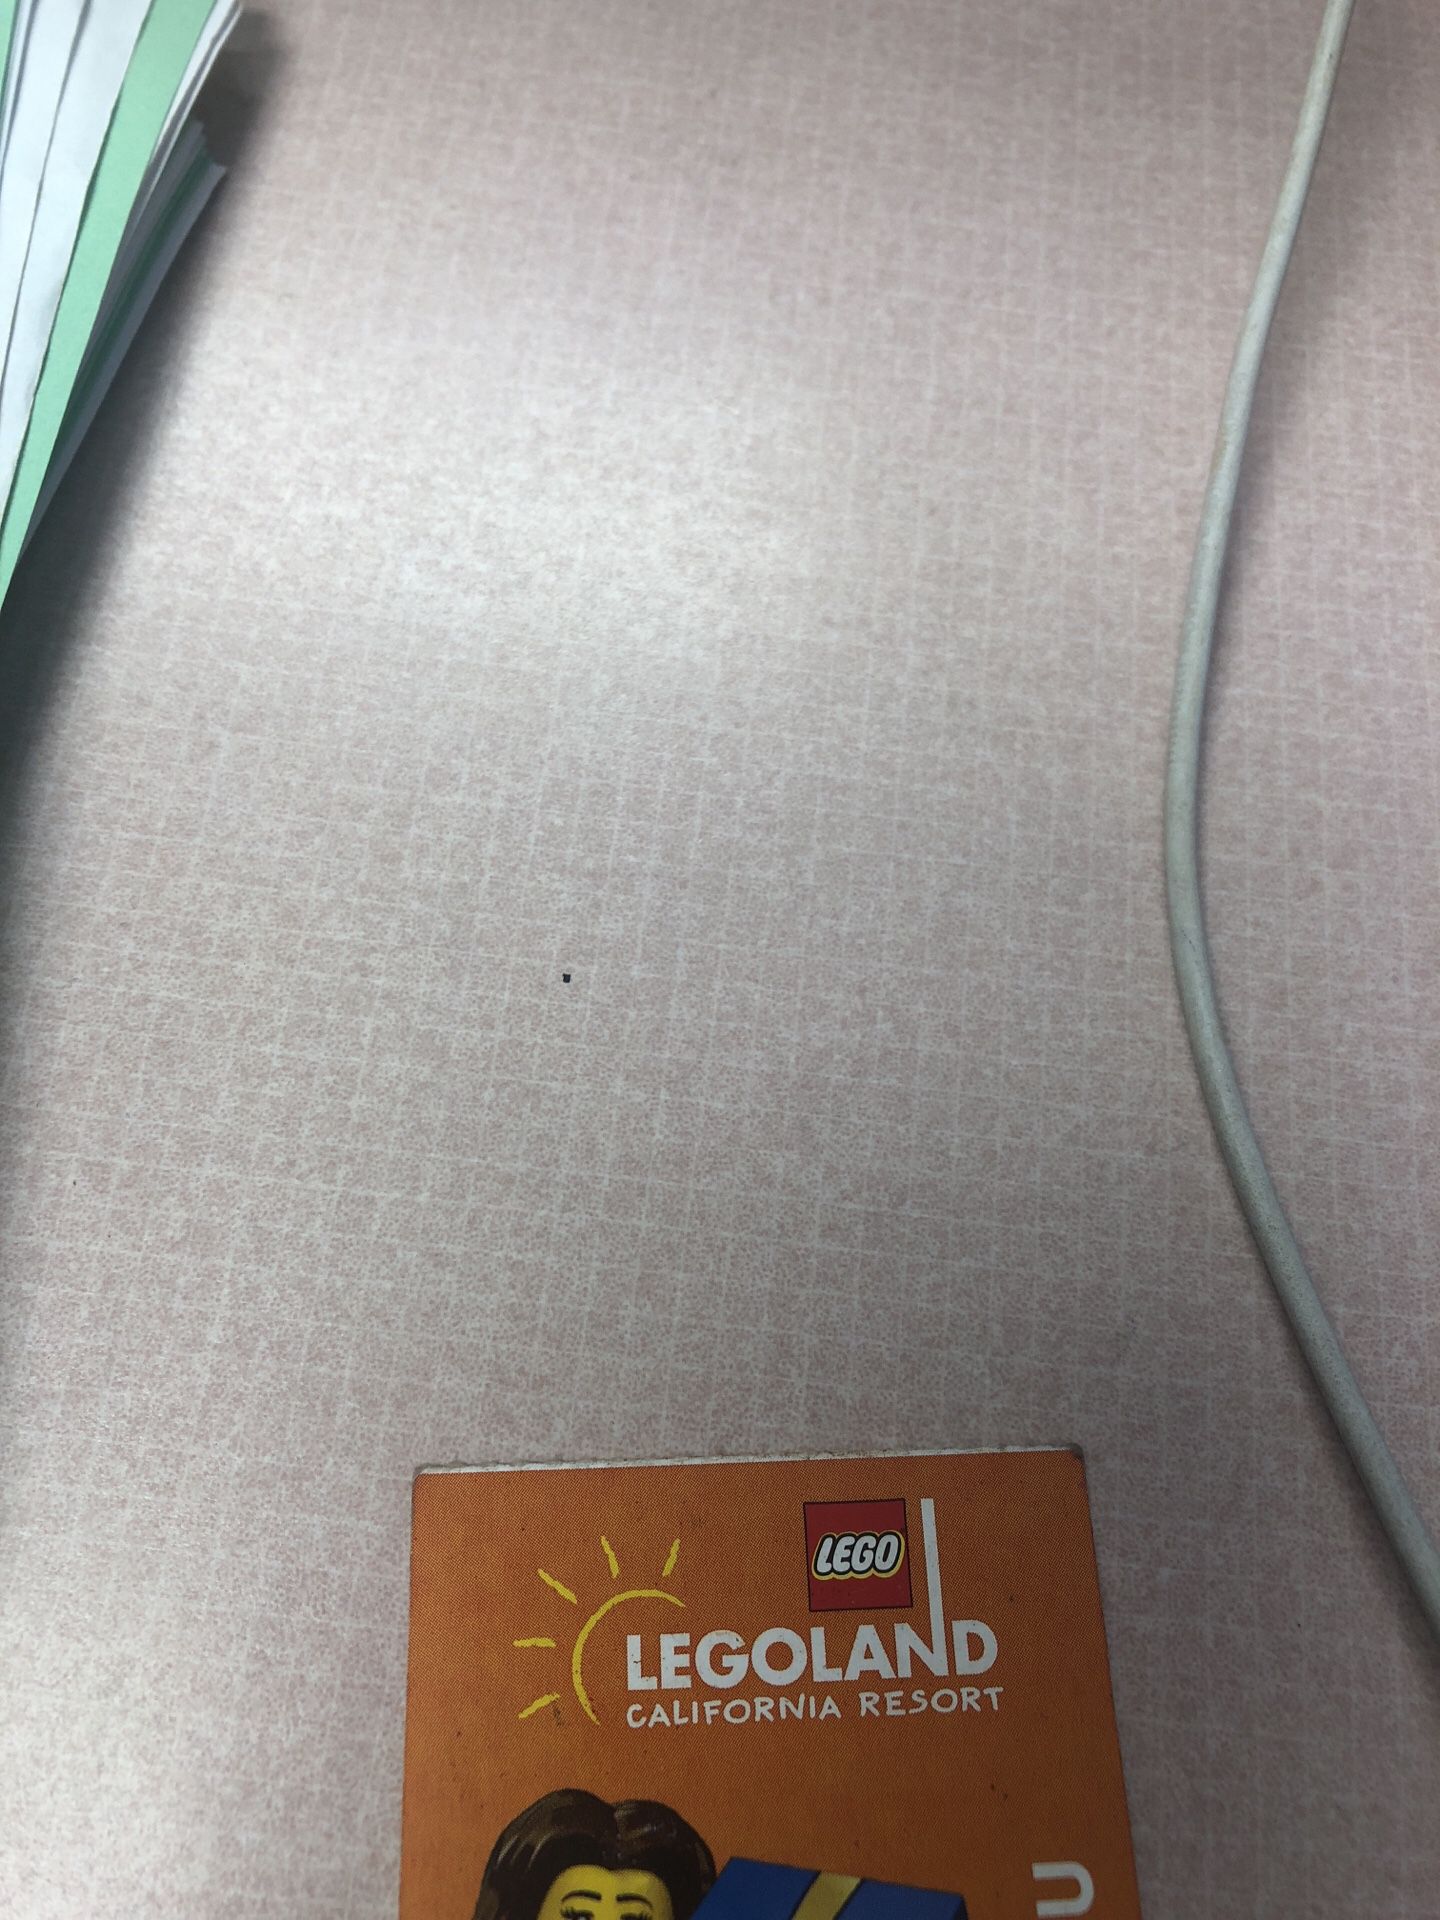 Legoland tickets